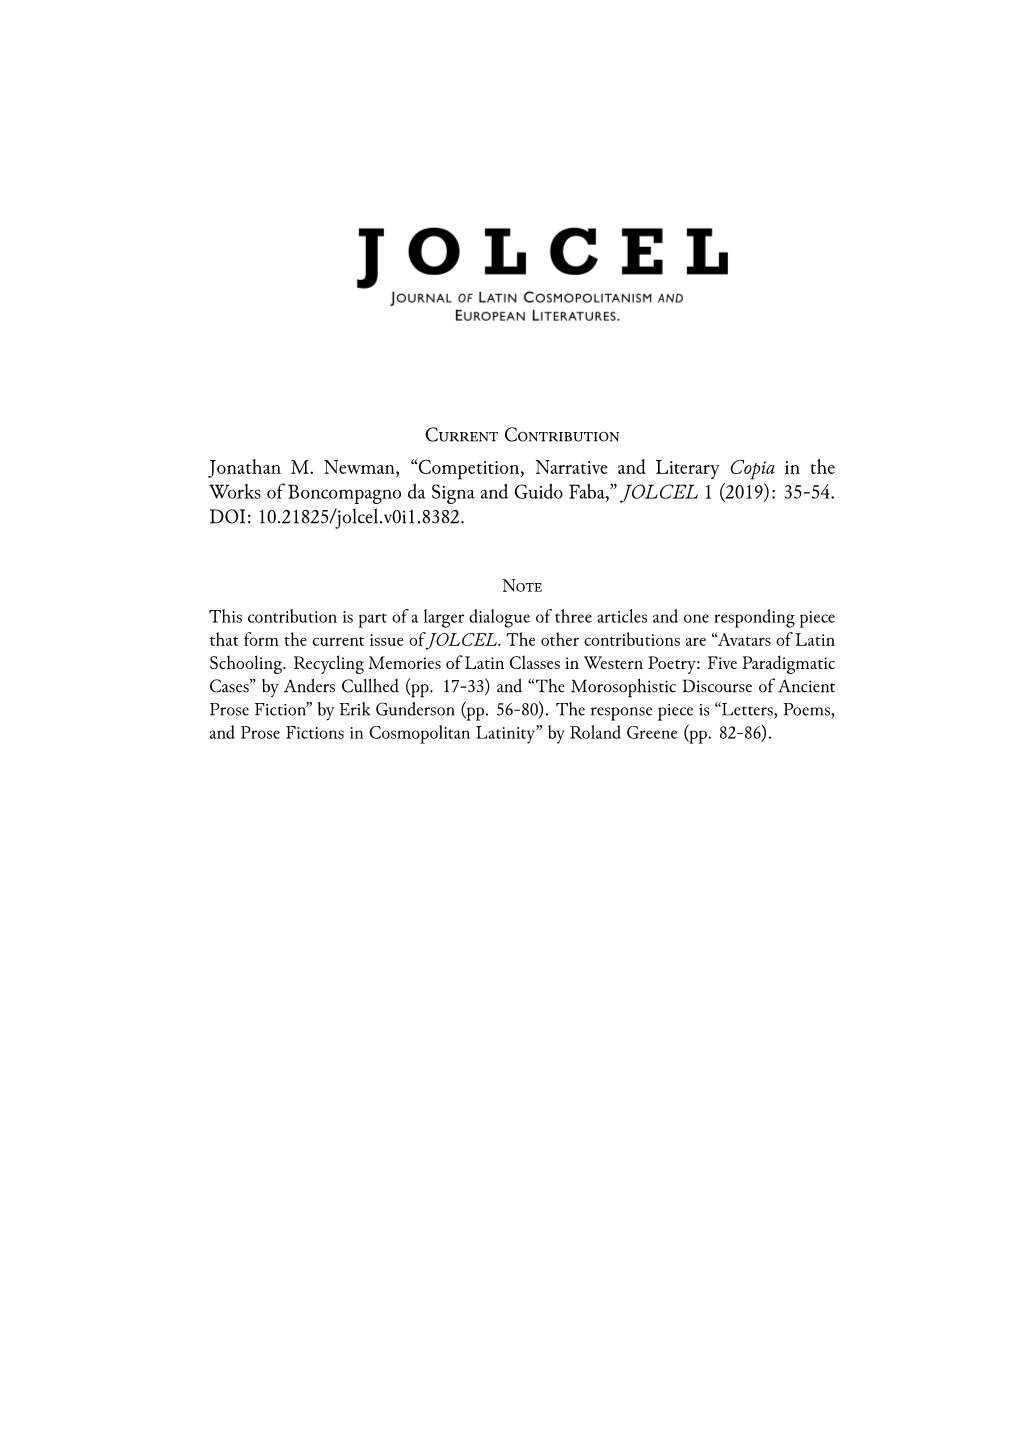 Competition, Narrative and Literary Copia in the Works of Boncompagno Da Signa and Guido Faba,” JOLCEL 1 (2019): 35-54